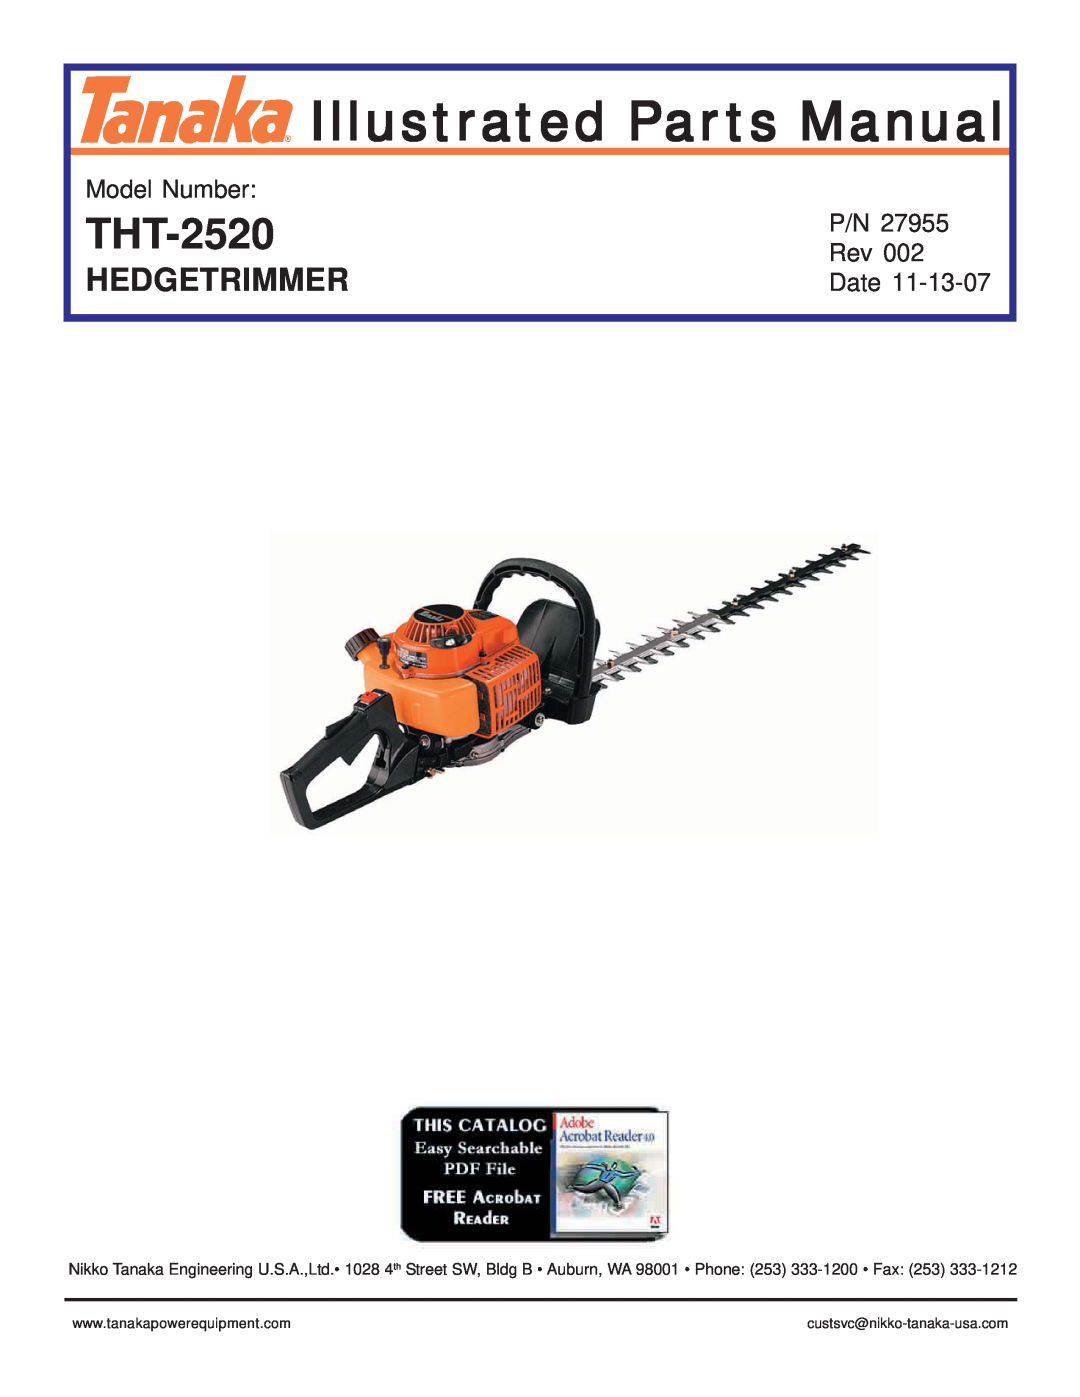 Tanaka THT-2520 manual Hedgetrimmer, Illustrated Parts Manual, Model Number, Date, custsvc@nikko-tanaka-usa.com 